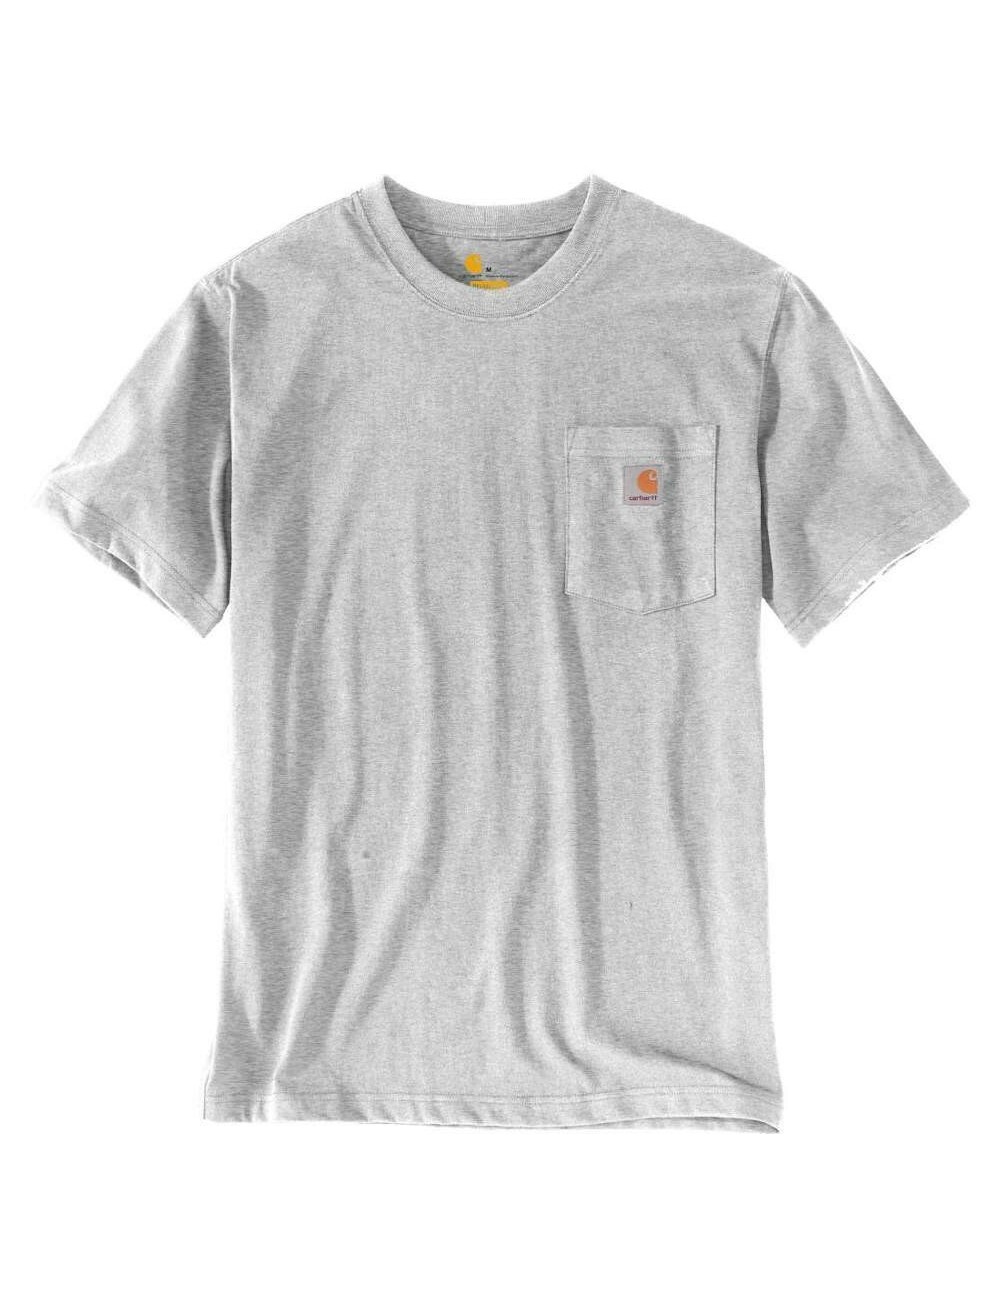 Carhartt Pocket S/S T-shirt